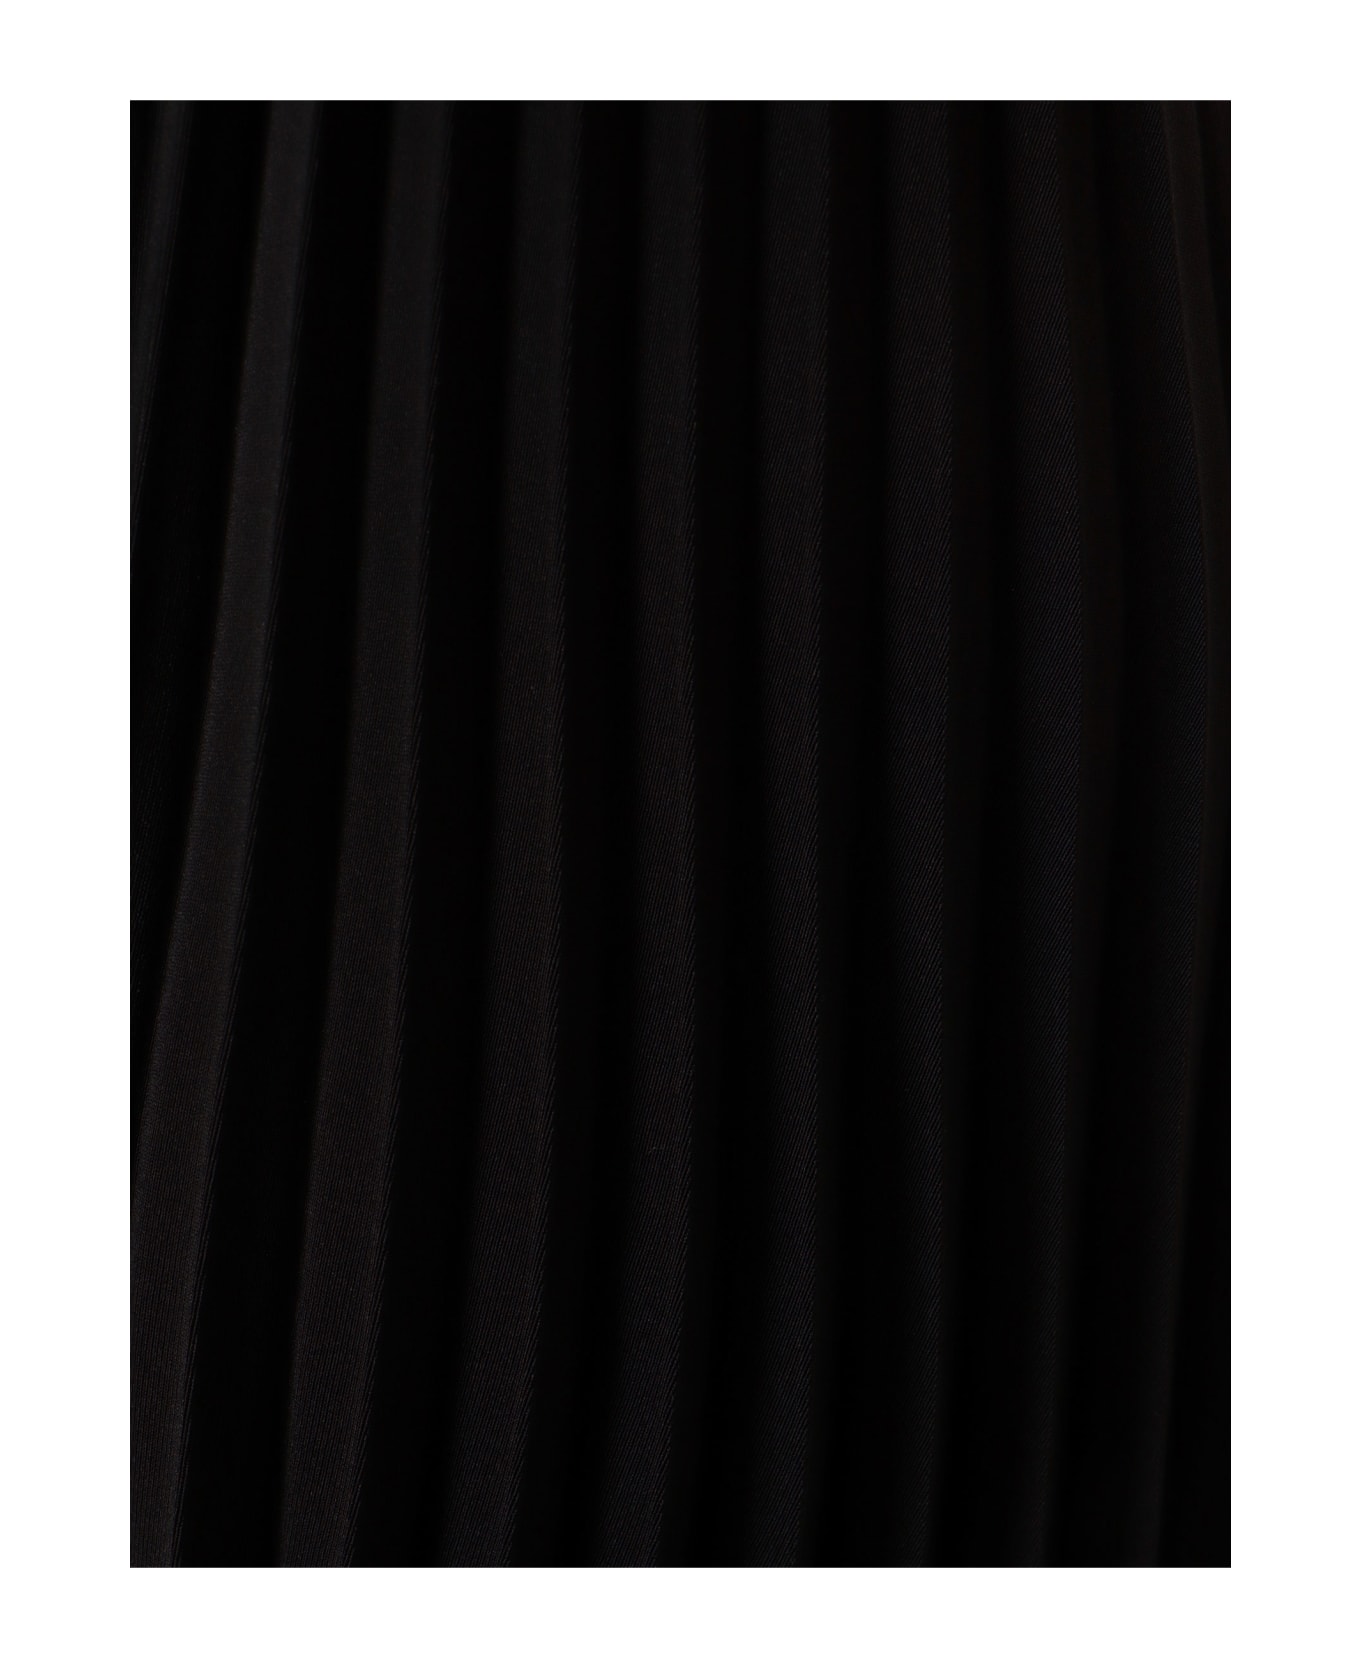 Saint Laurent Pleated Skirt - Black スカート